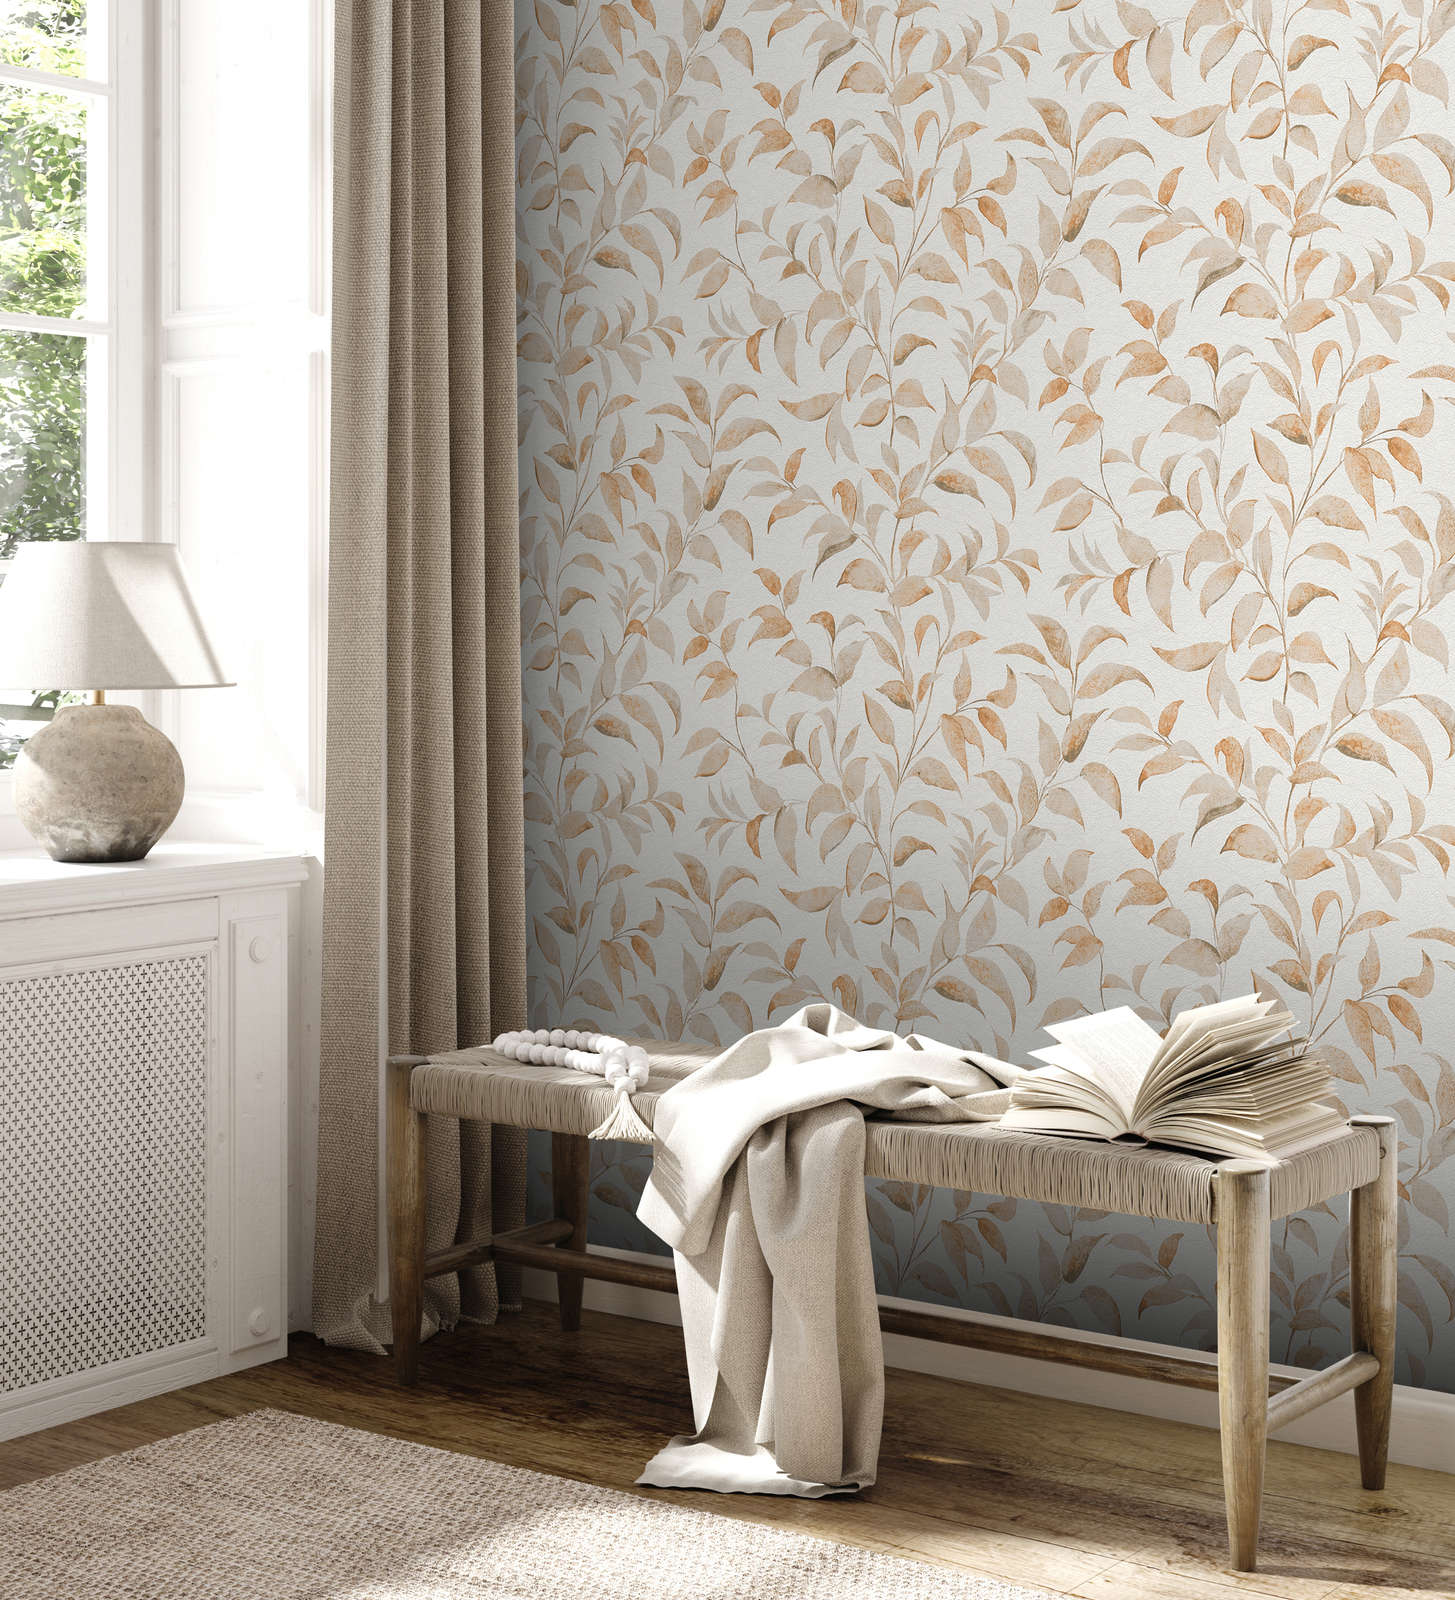             Leaves wallpaper floral shimmer textured - white, orange
        